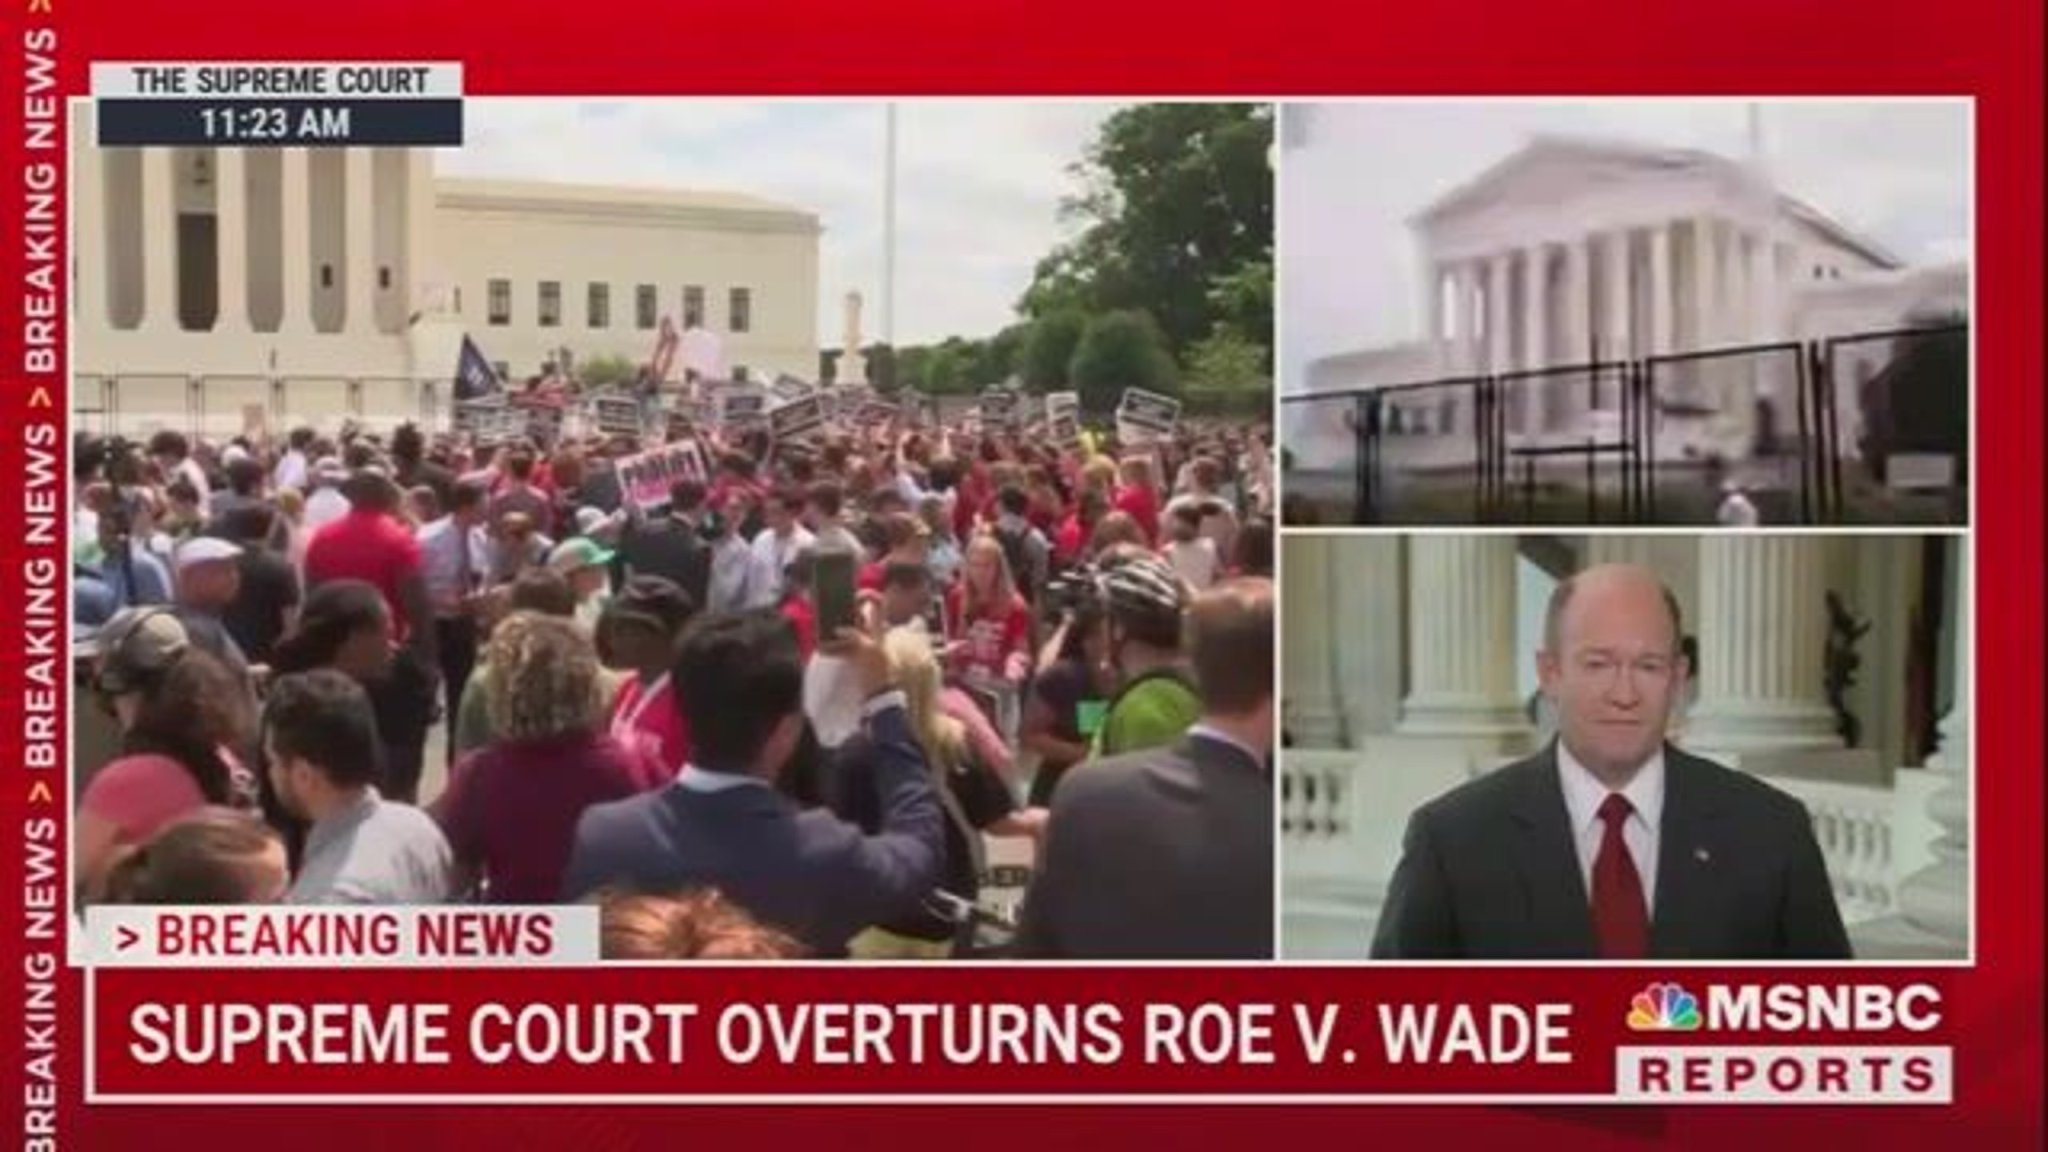 Sen. Chris Coons (D-DE) reacts to the Supreme Court overturning Roe v. Wade.